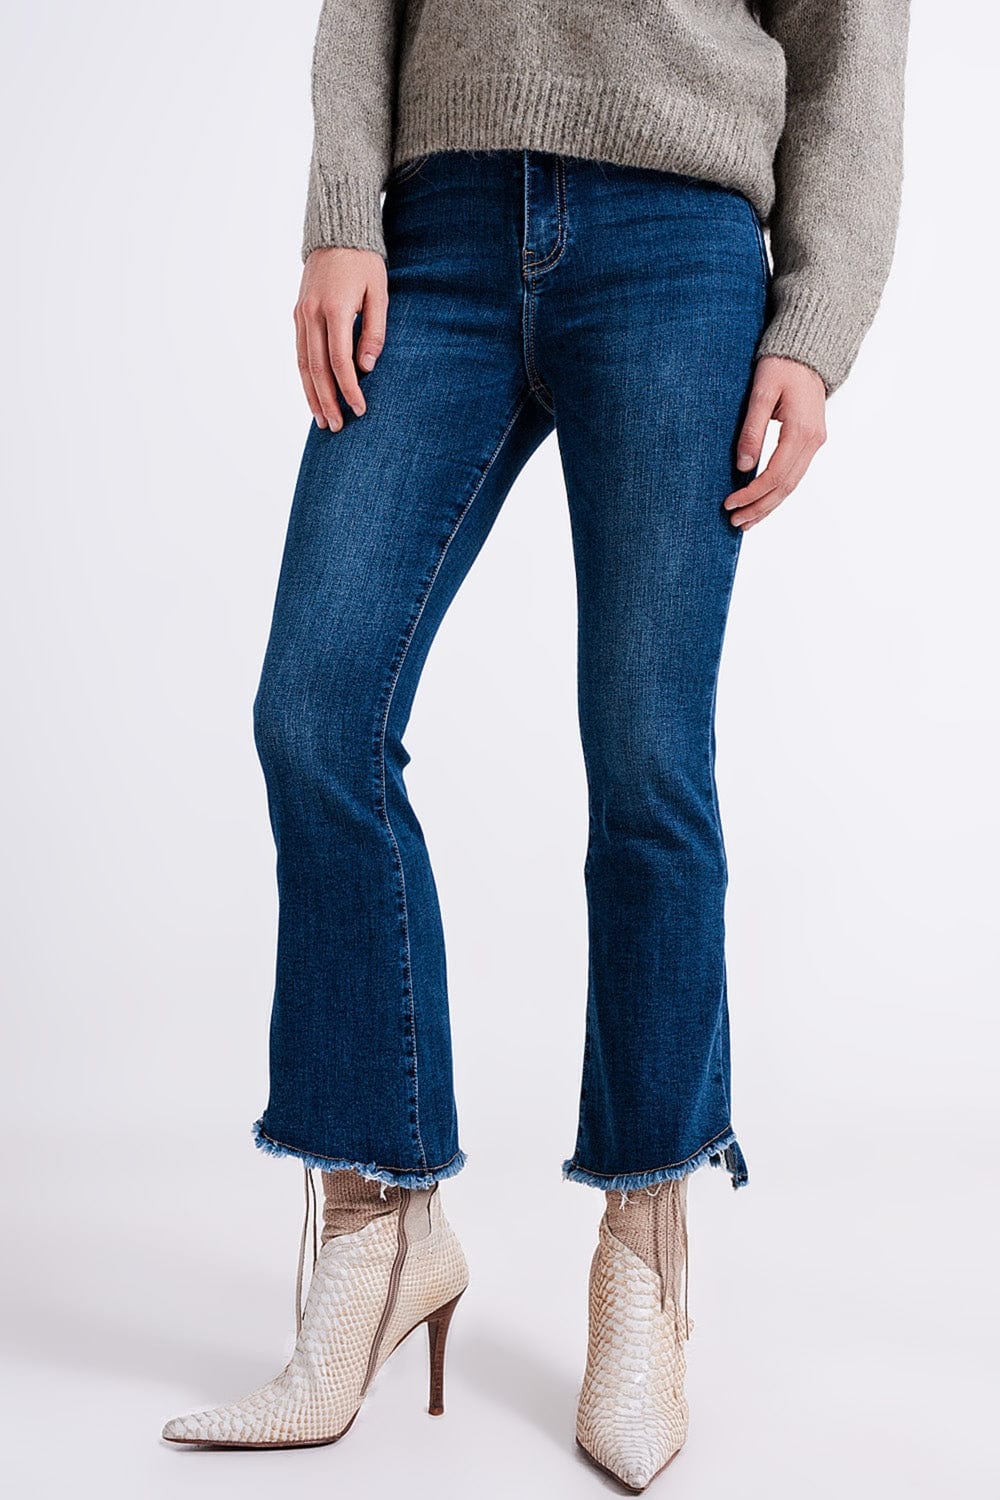 Q2 Women's Jean High Waisted Jeans with Asymmetrical Hem